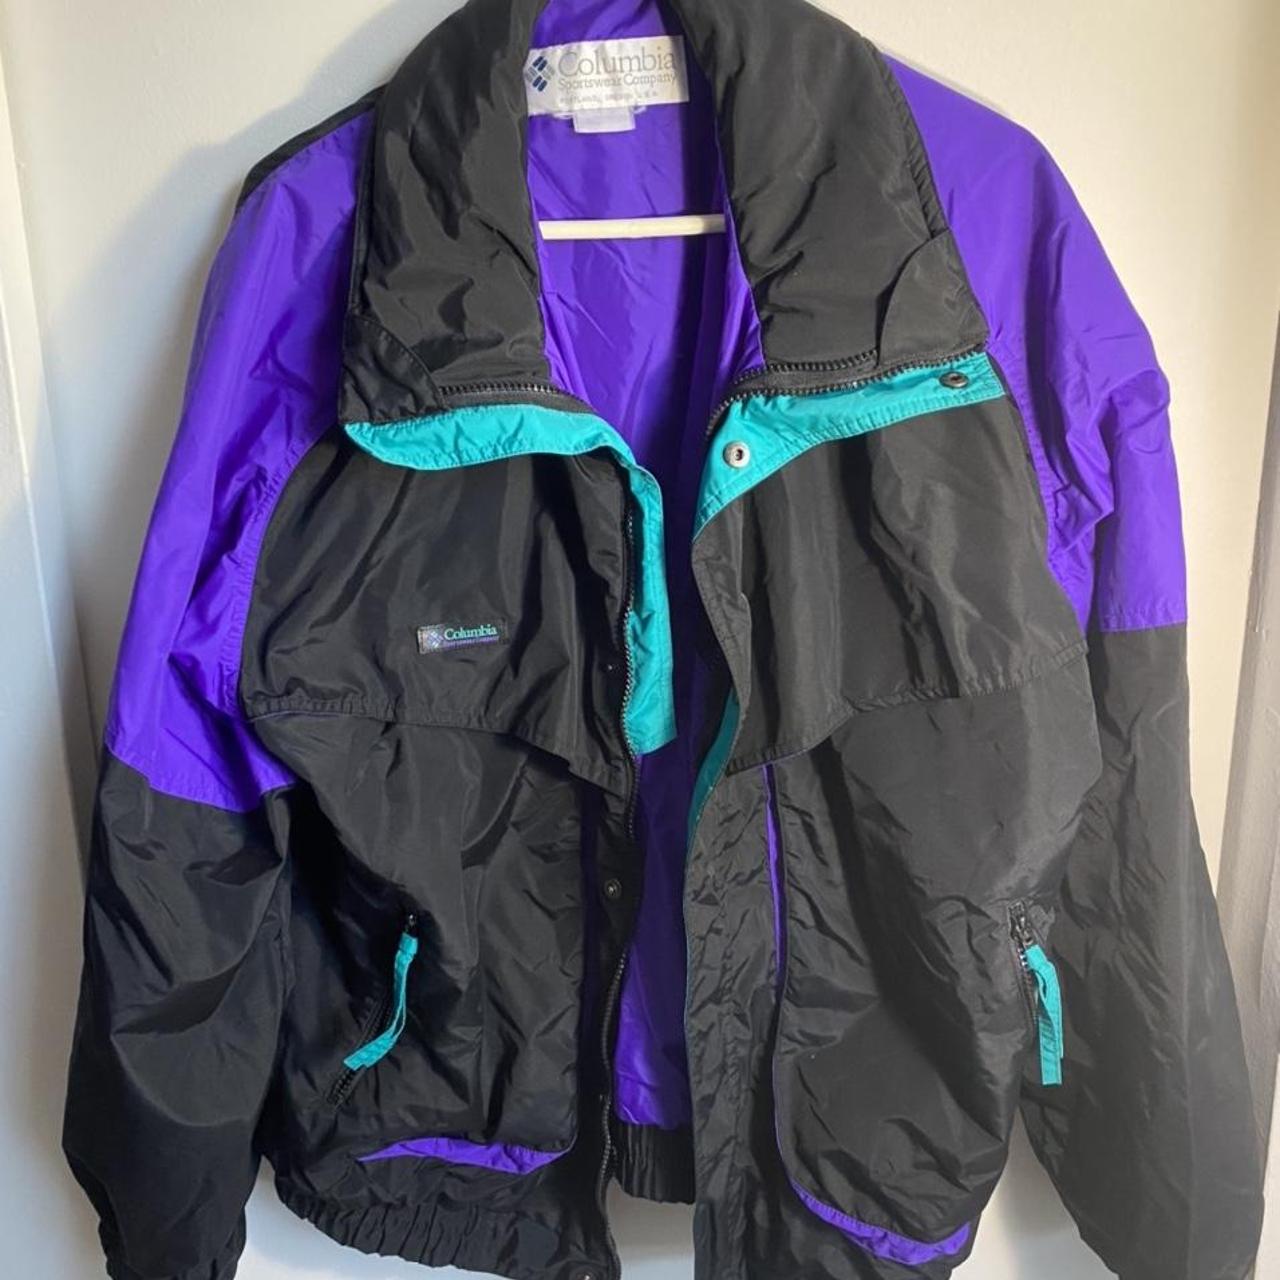 Vintage 90’s Columbia coat Fits like a... - Depop